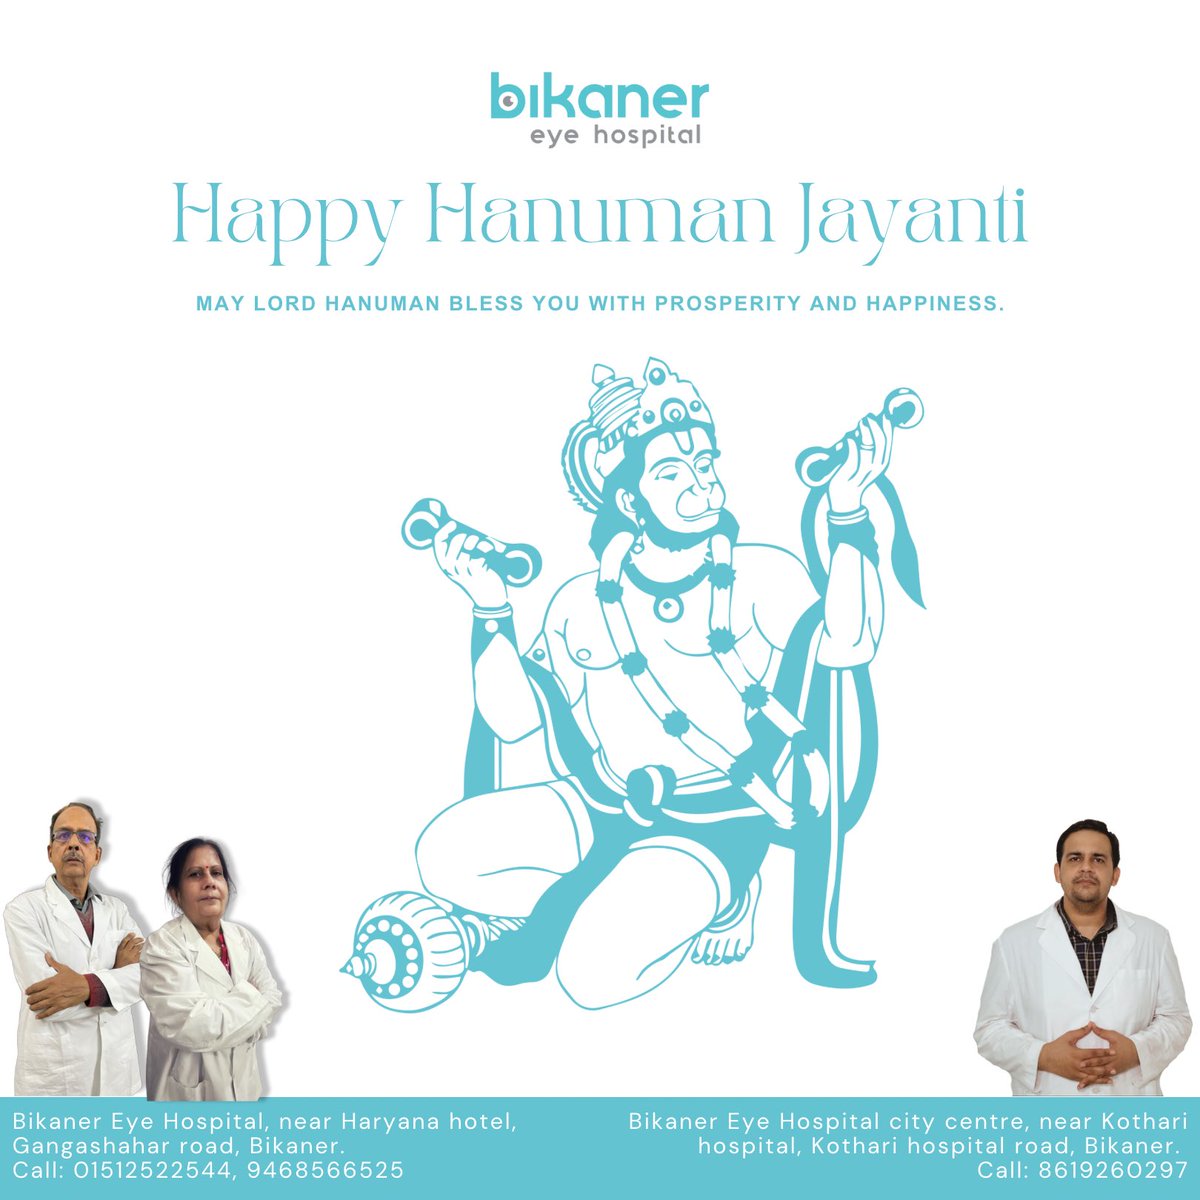 #HappyHanumanJayanti 
.
.
#Bikanereyehospital
#Bikaner
#EyeDoctor